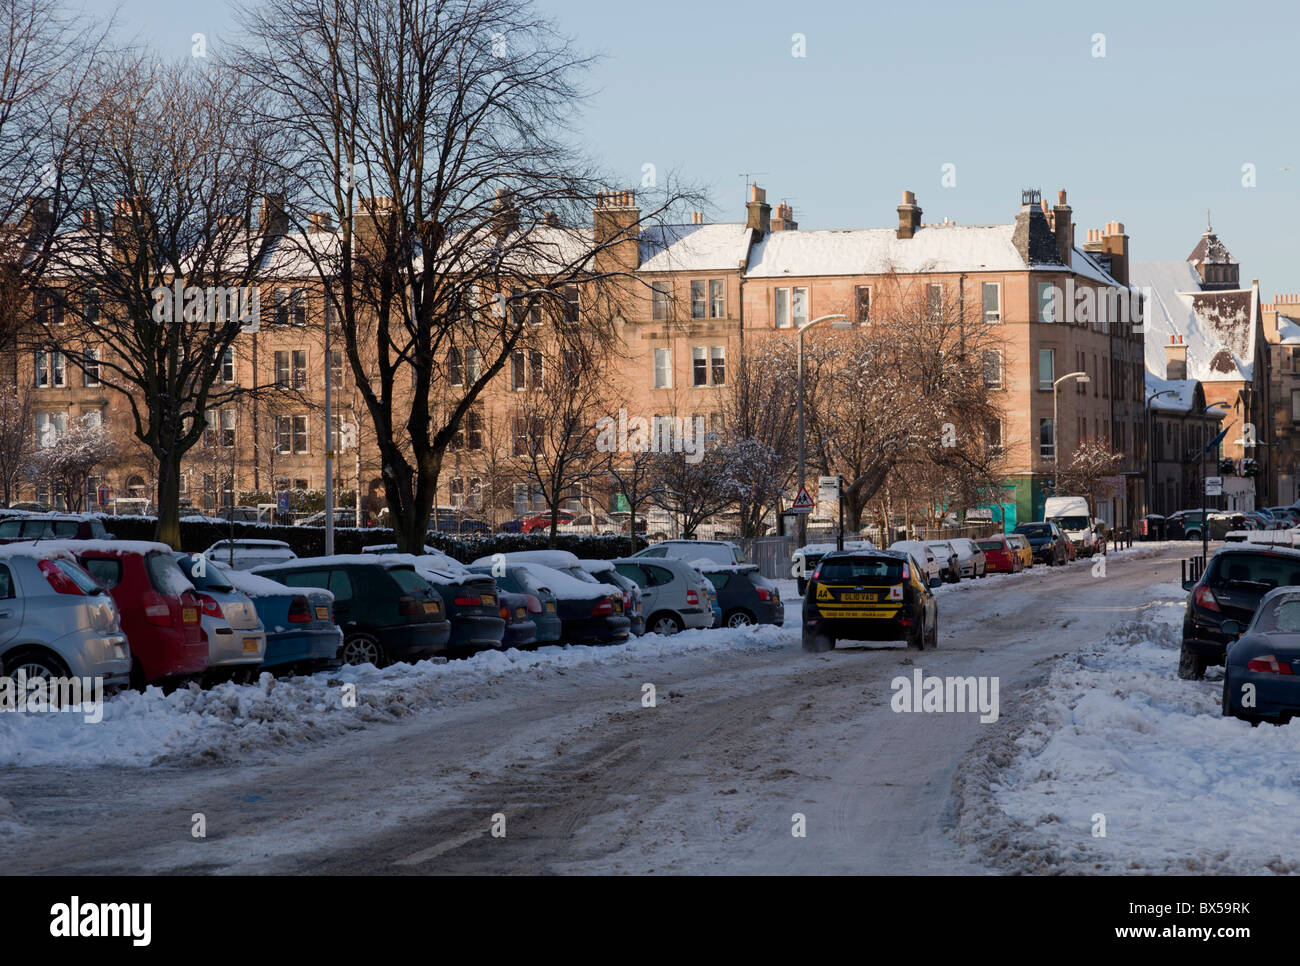 A learner driver on a snowy icy street, Dalmeny St Edinburgh Scotland Stock Photo